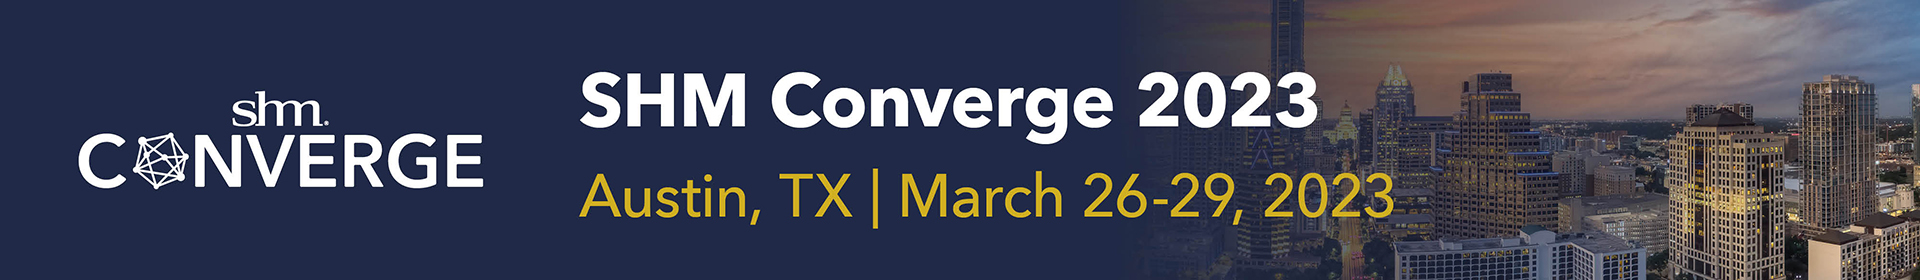 2023 SHM Converge  Event Banner